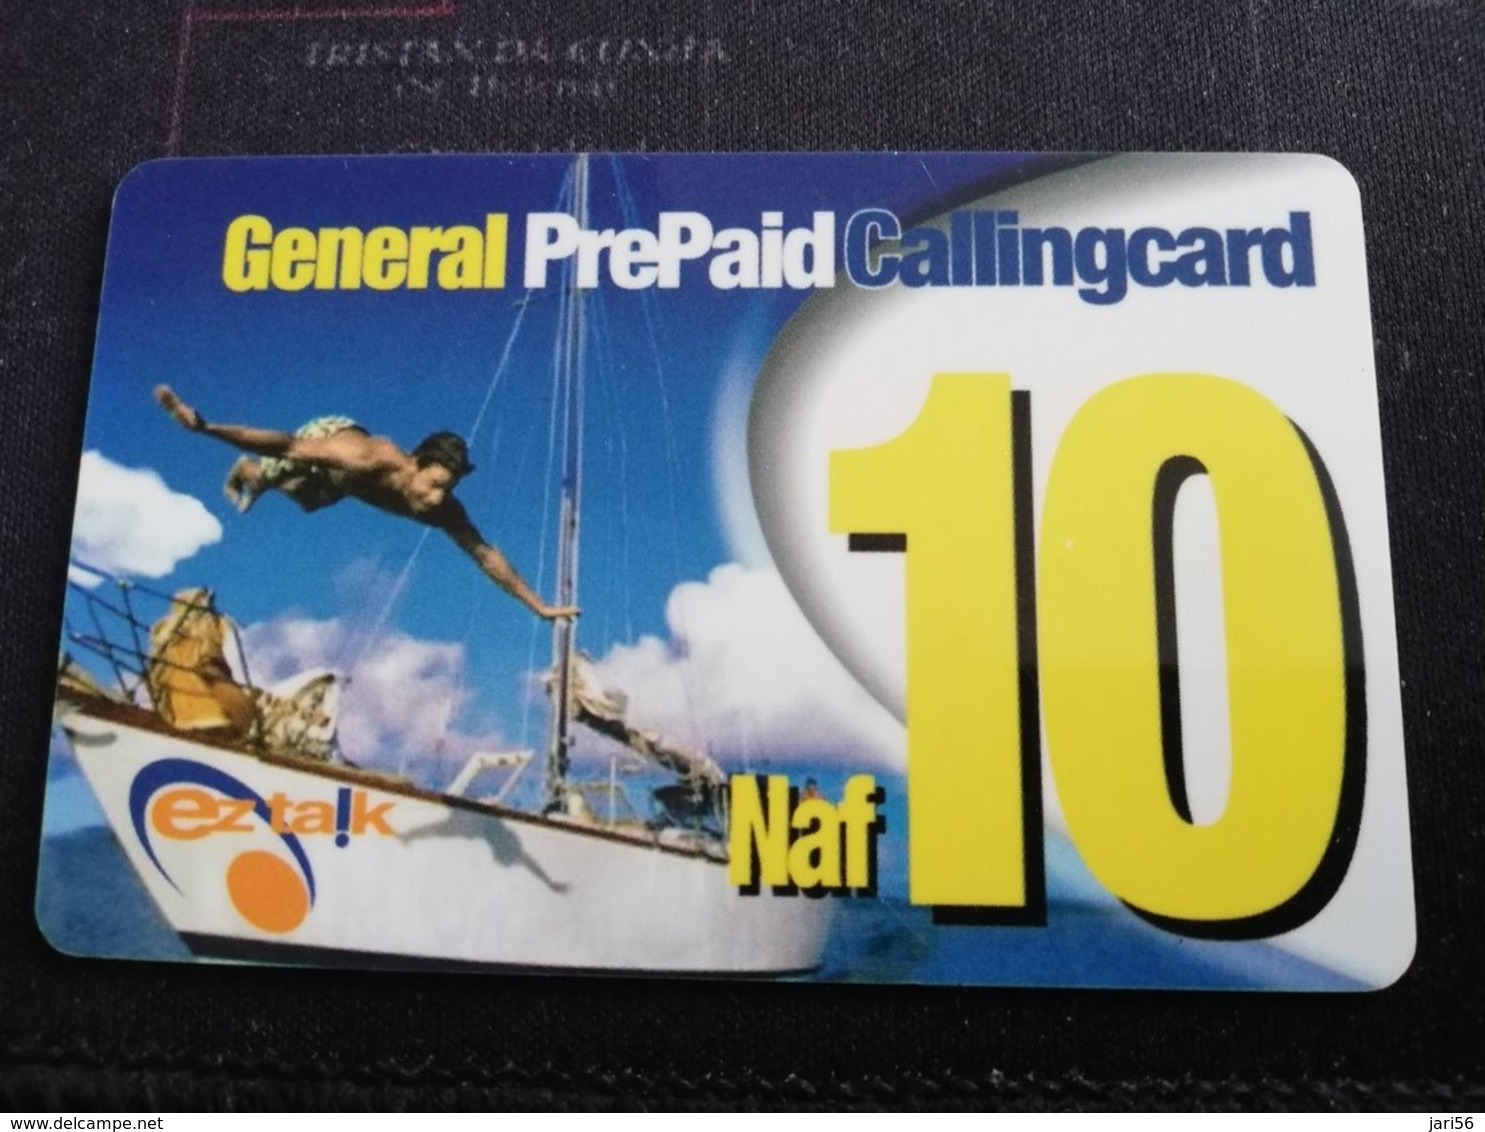 CURACAO NAF 10  GENERAL PREPAID CALLINGCARD, EZ TALK  THICK CARD     ** 957** - Antillas (Nerlandesas)